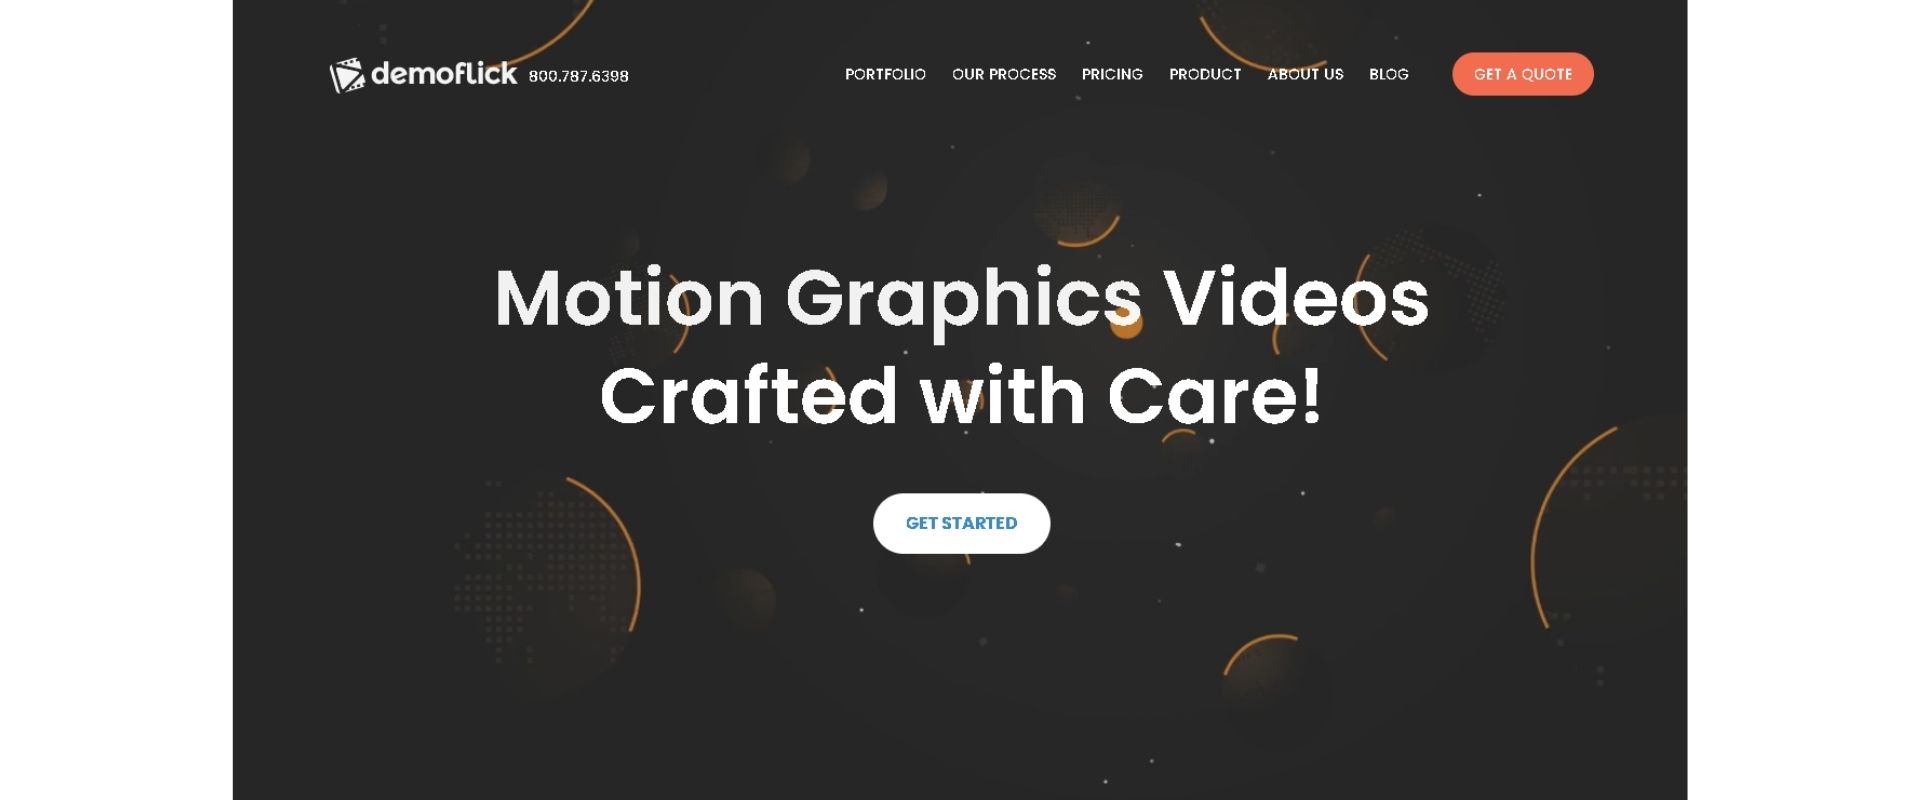 Boston Explainer Video Company - DemoFlick